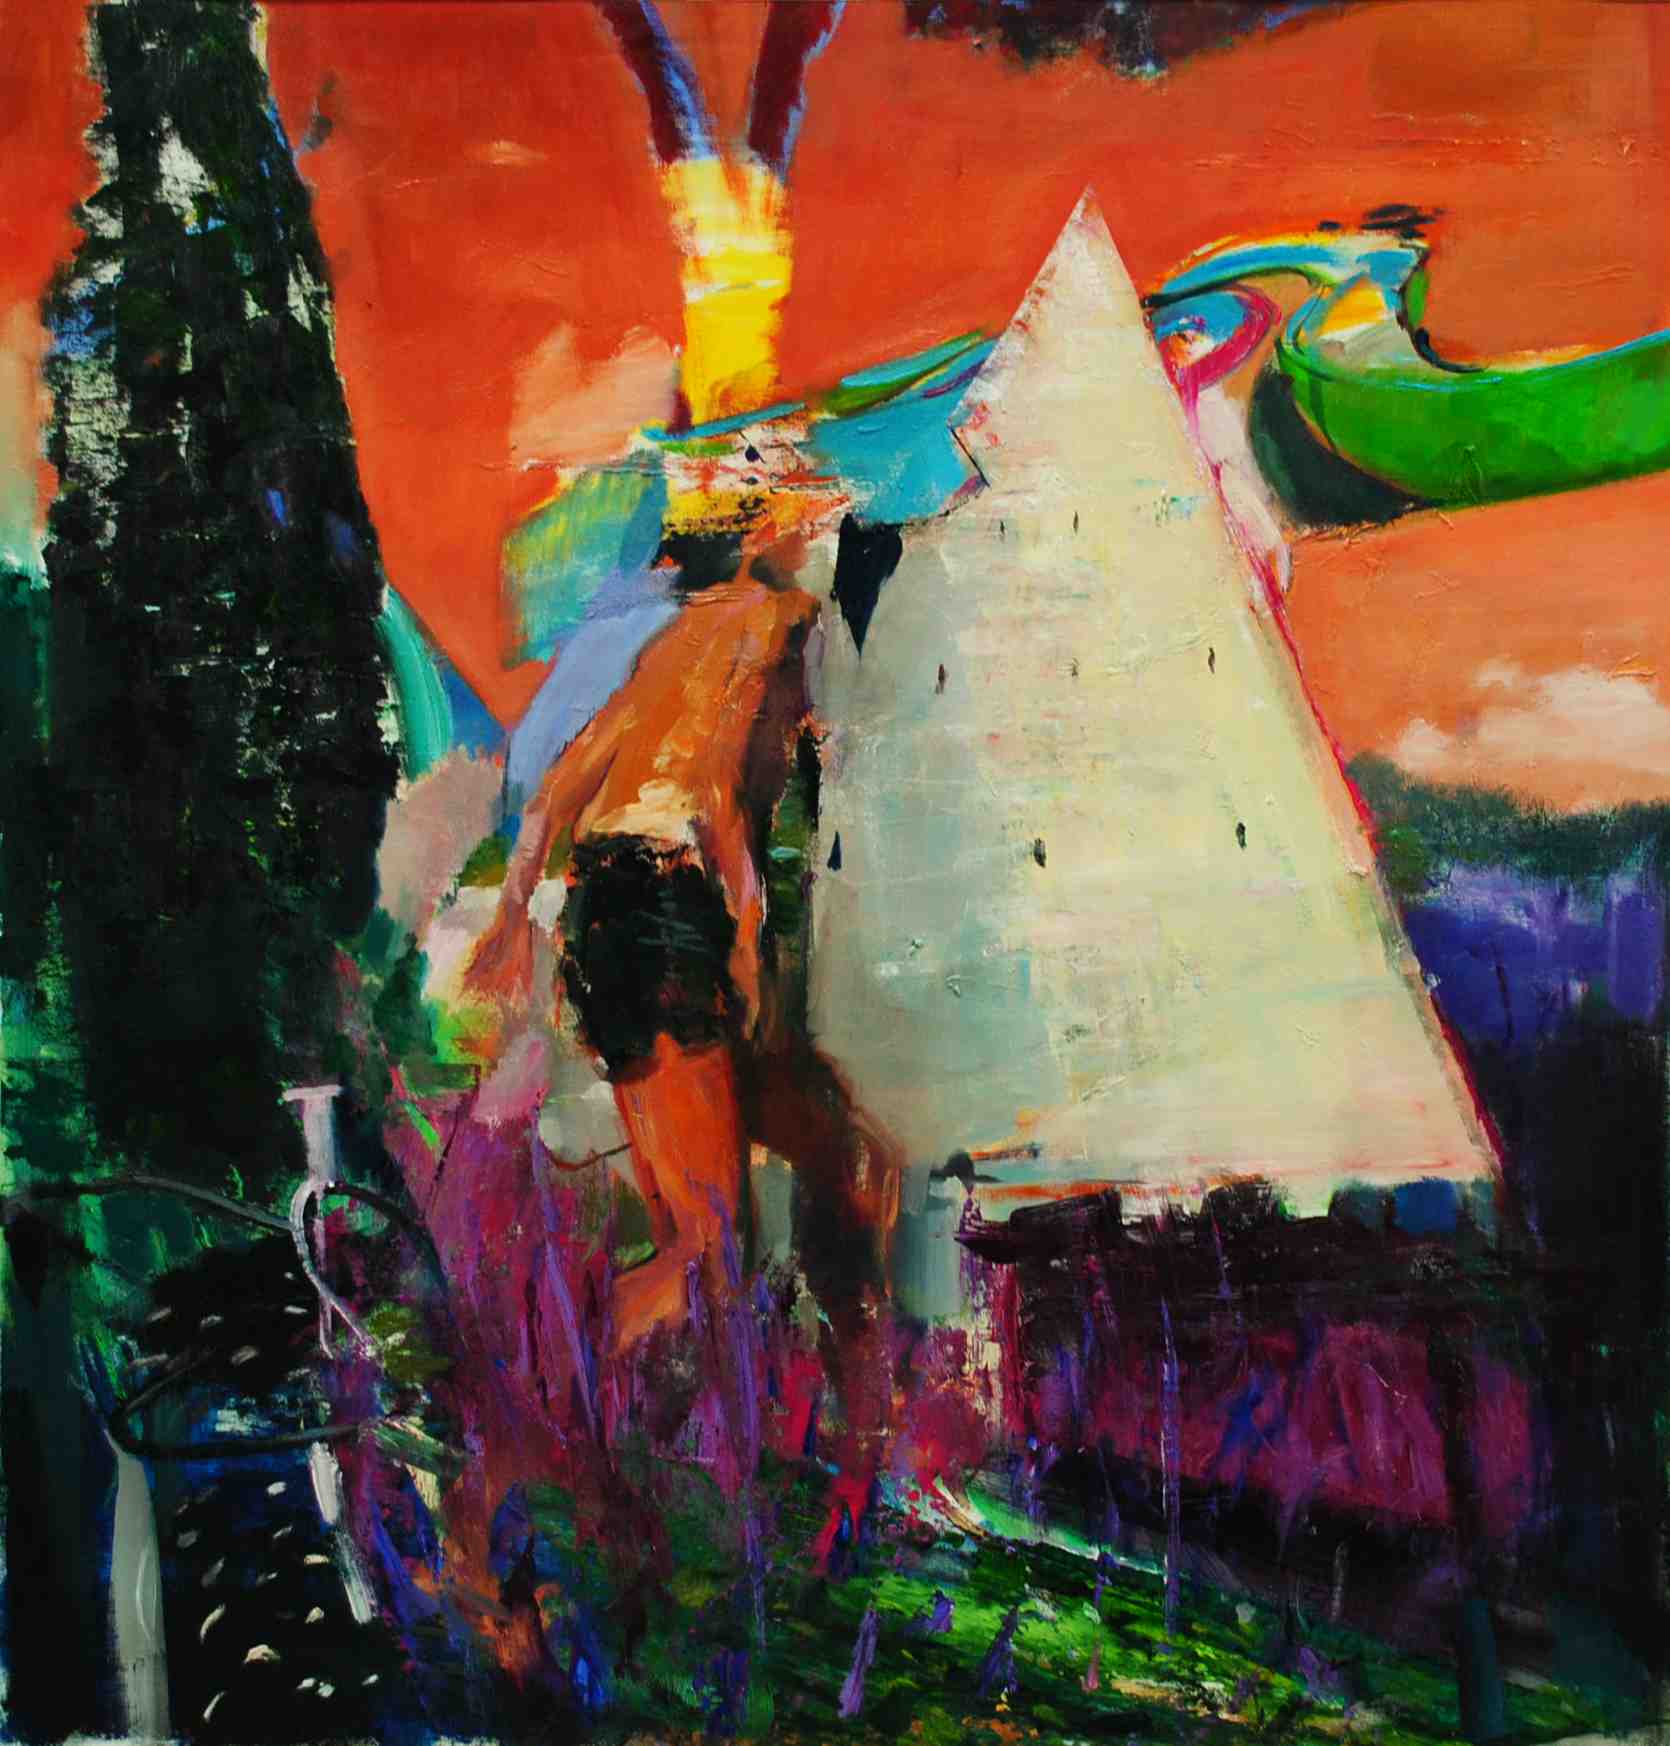 Sensation behind the pyramid | oil on canvas | 85 x 83 cm | 2015